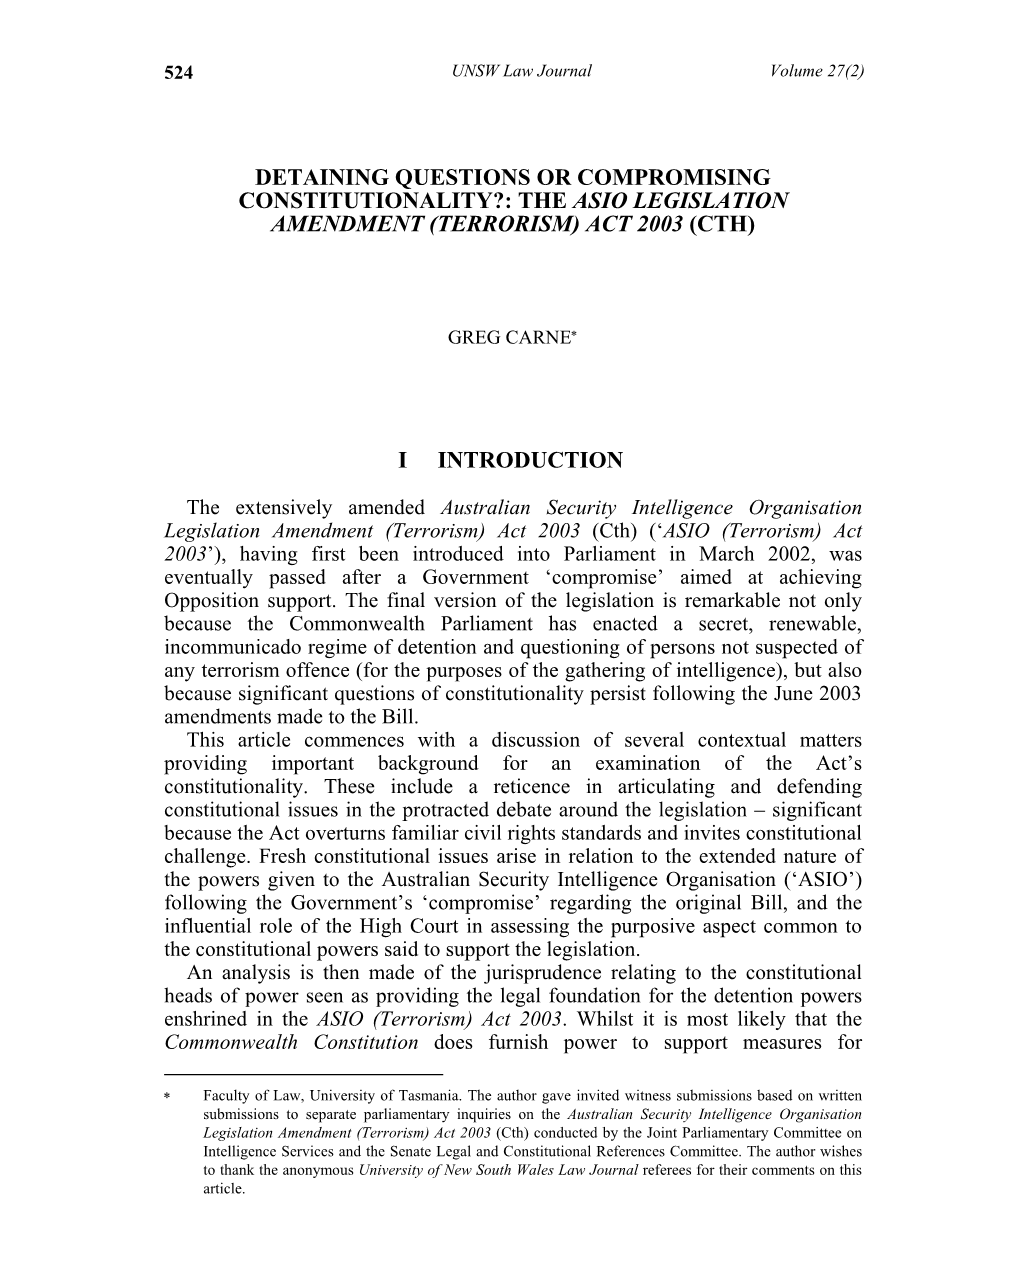 The Asio Legislation Amendment (Terrorism) Act 2003 (Cth)